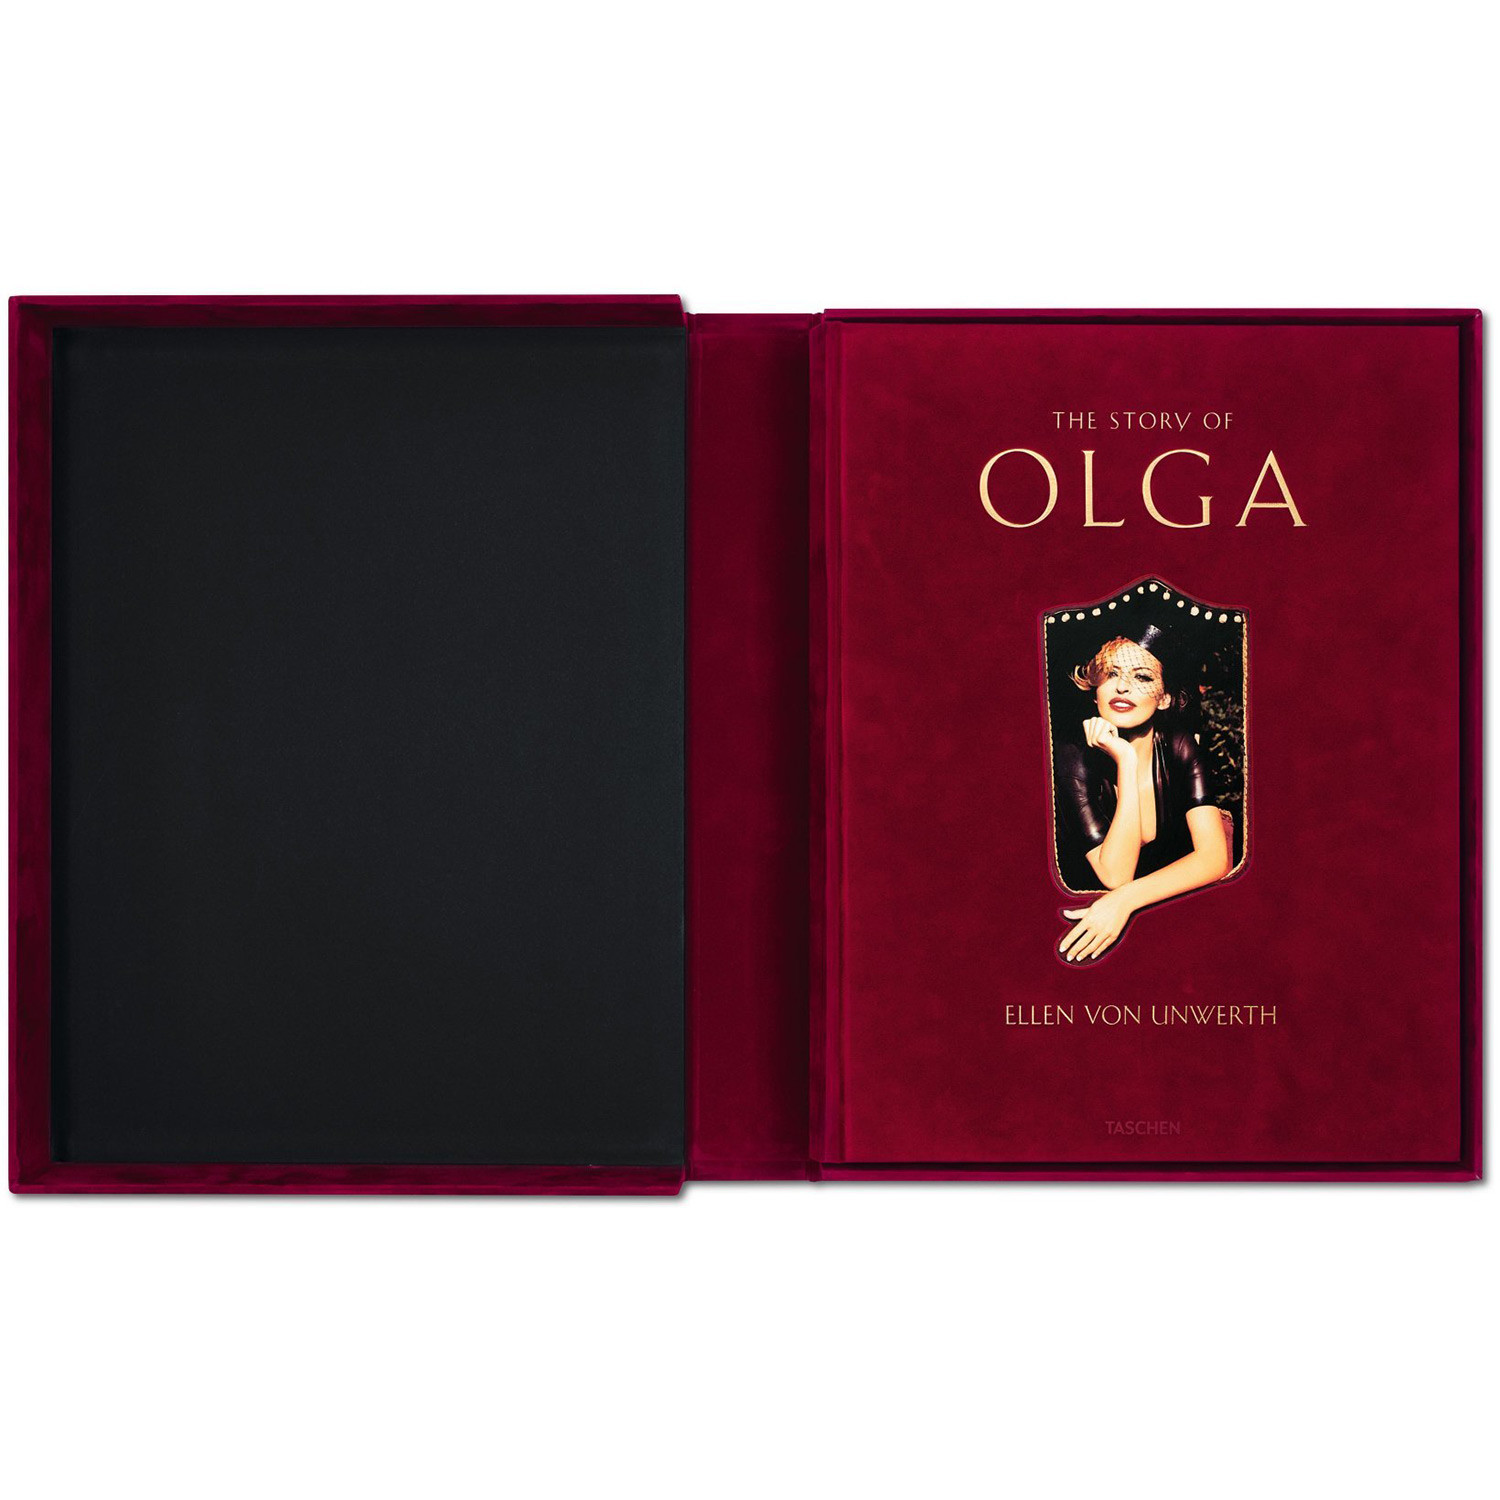 The book of olga все фото